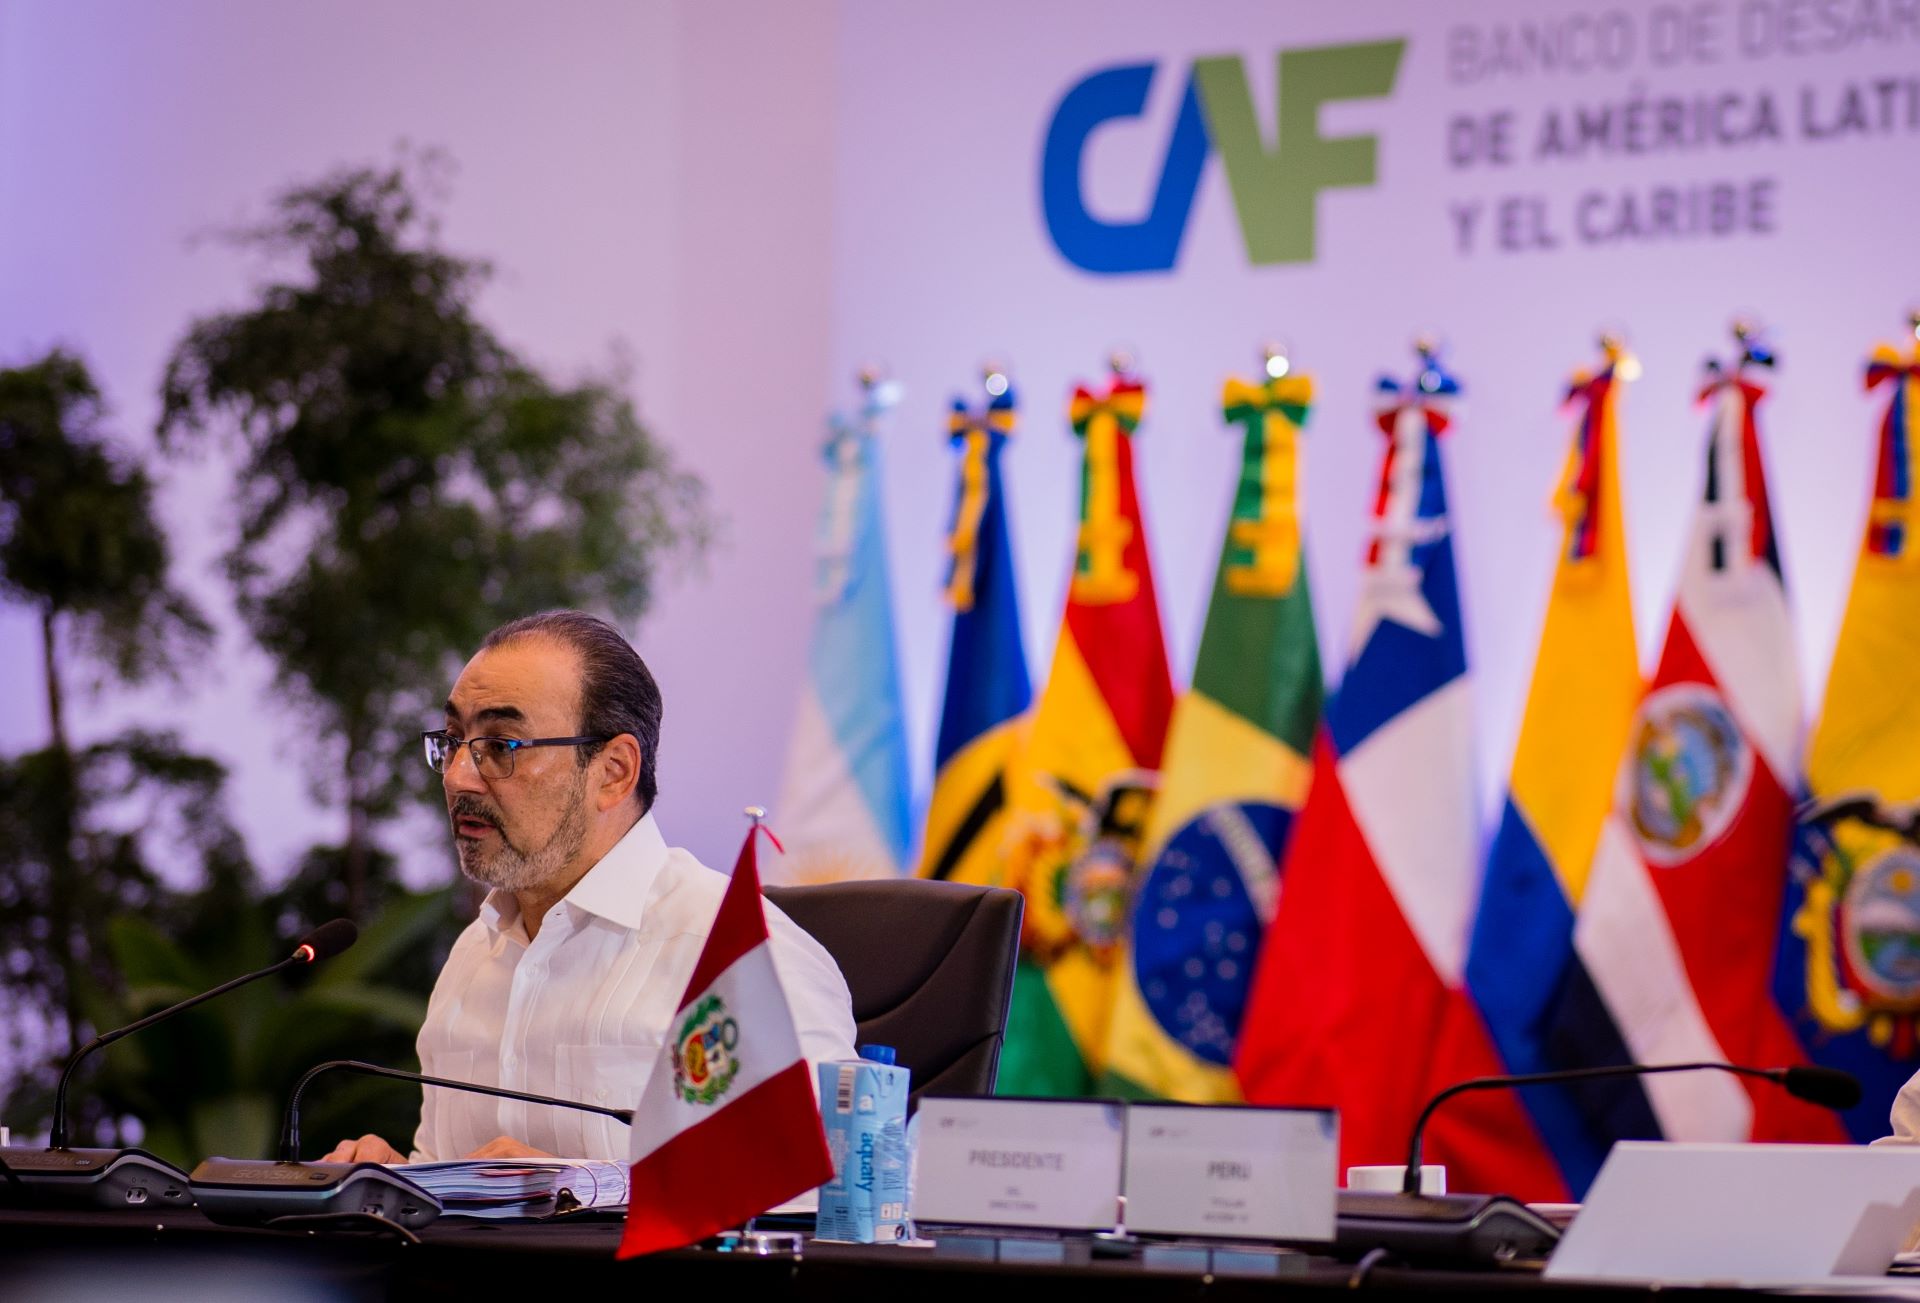 CAF supports food assistance program in Argentina